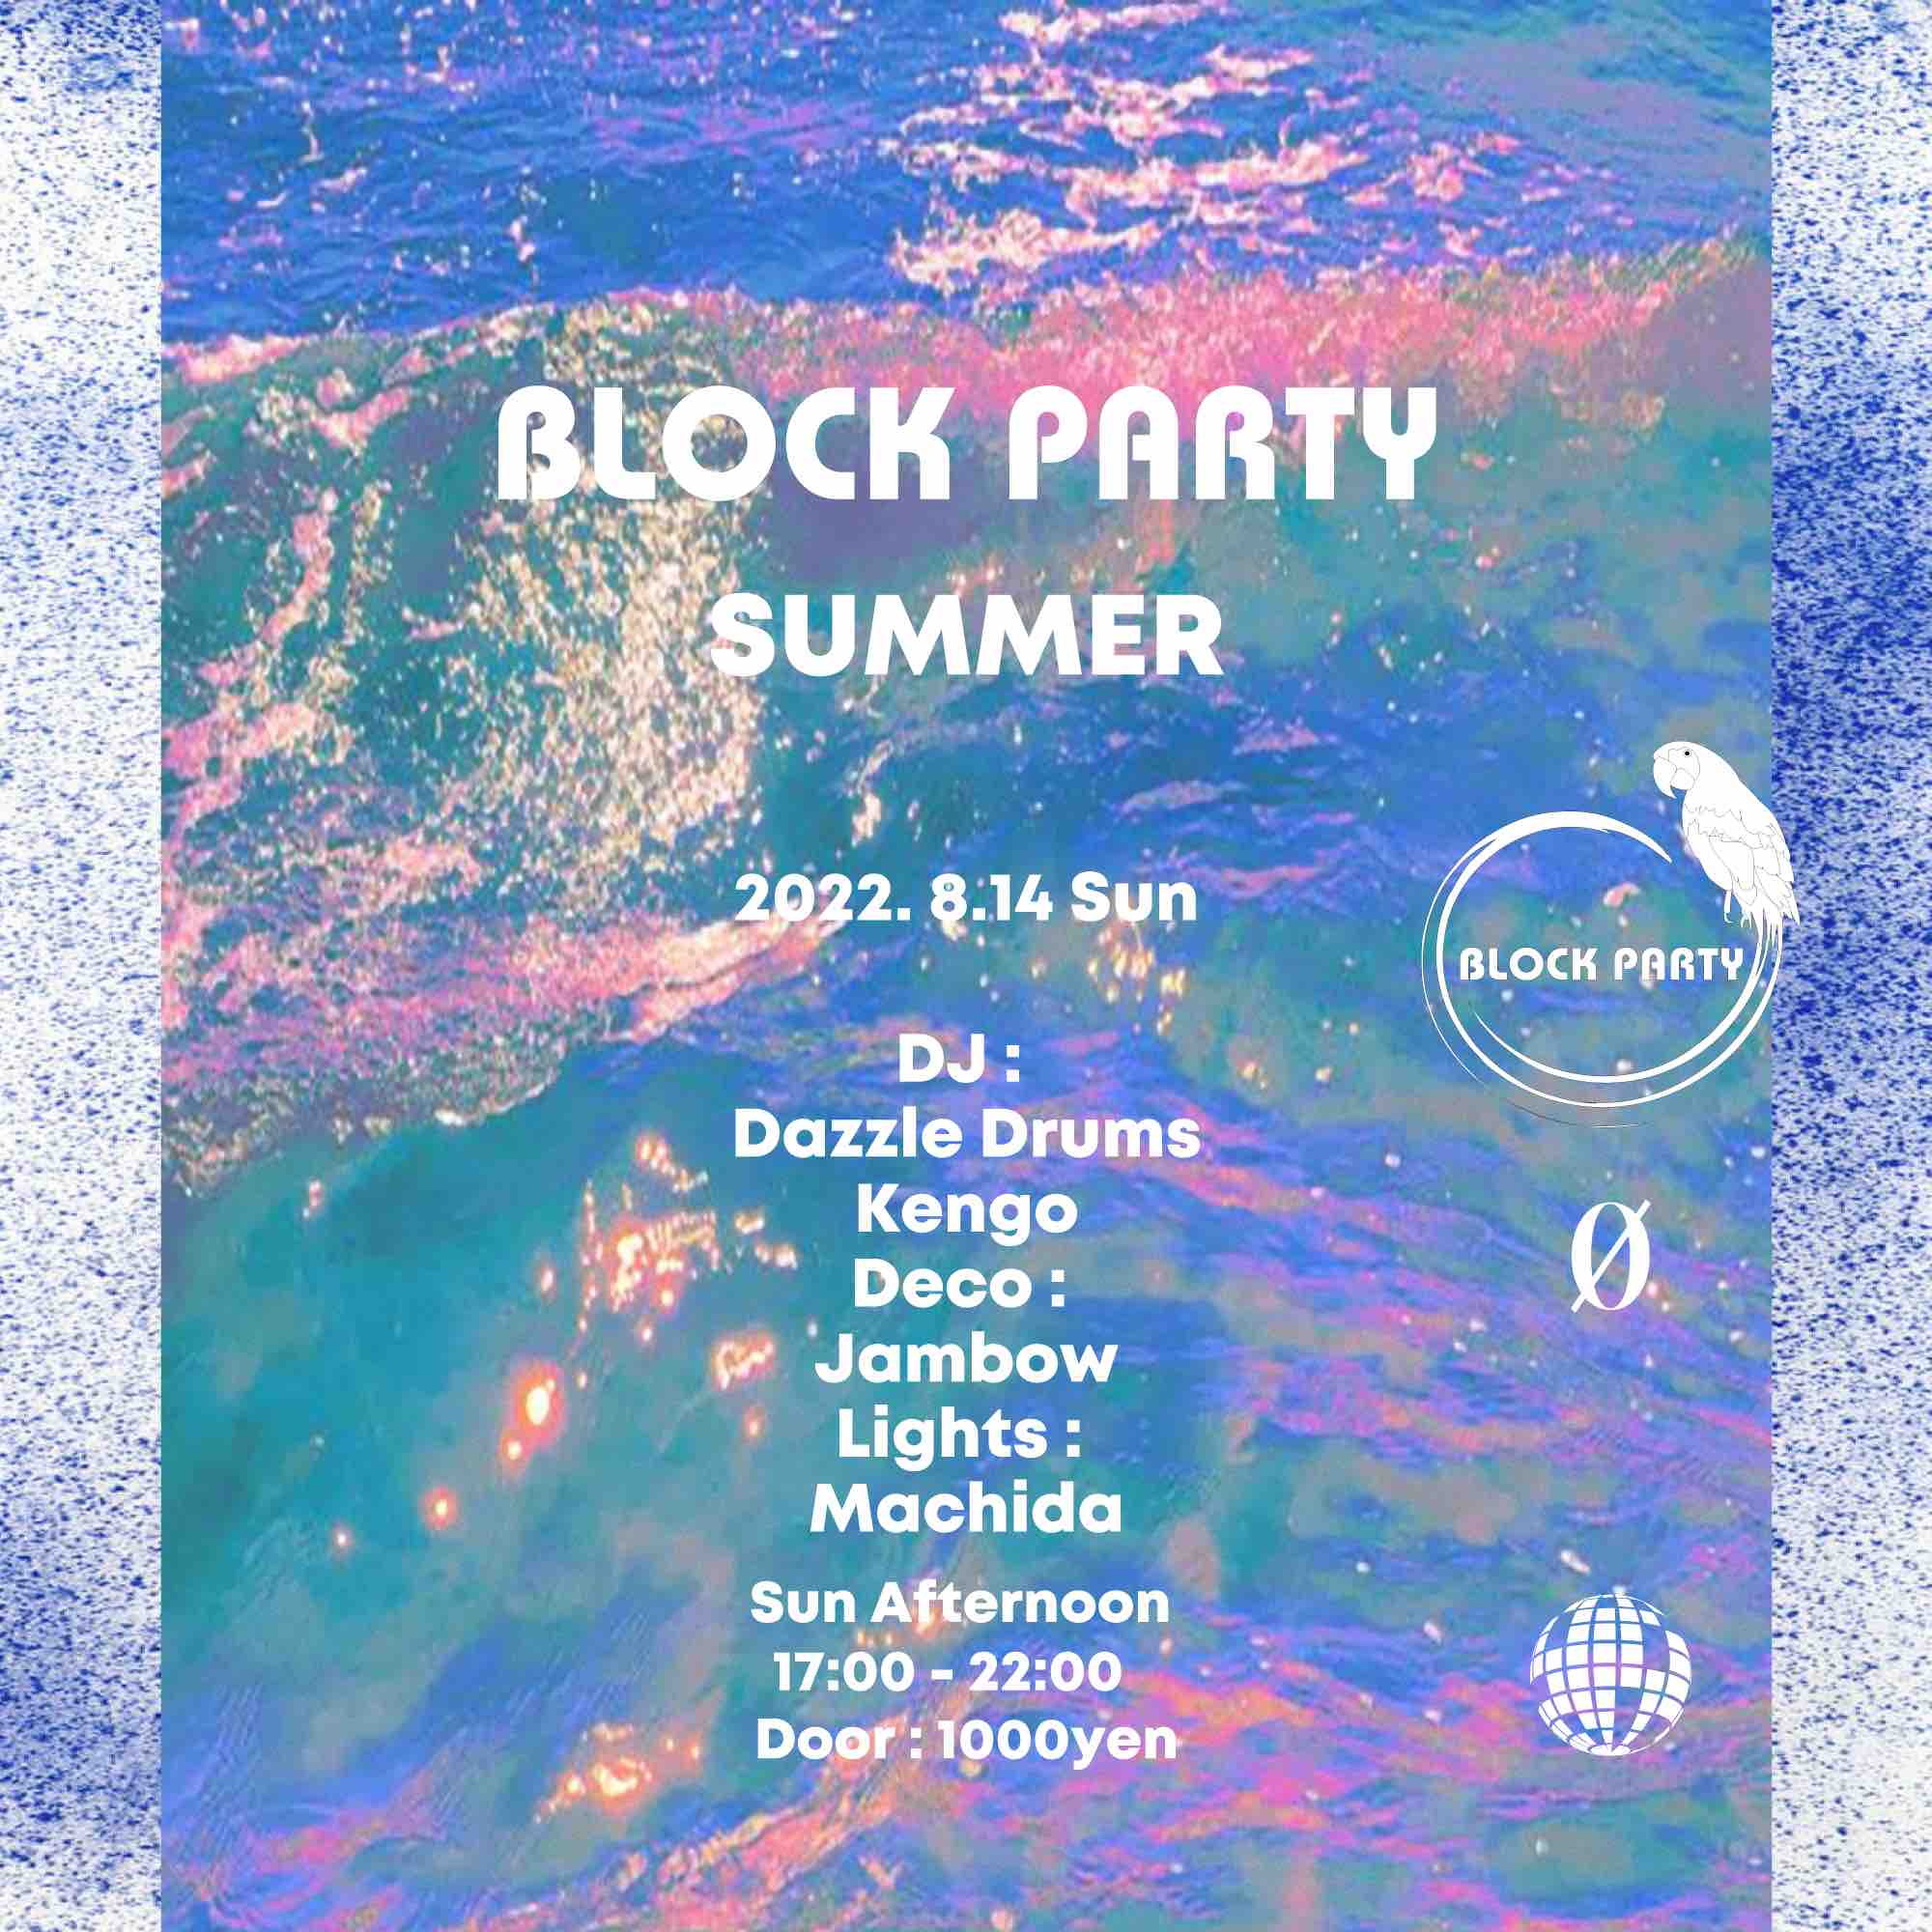 8.14.22 (Sun Afternoon) Block Party “Summer” @ 0 Zero